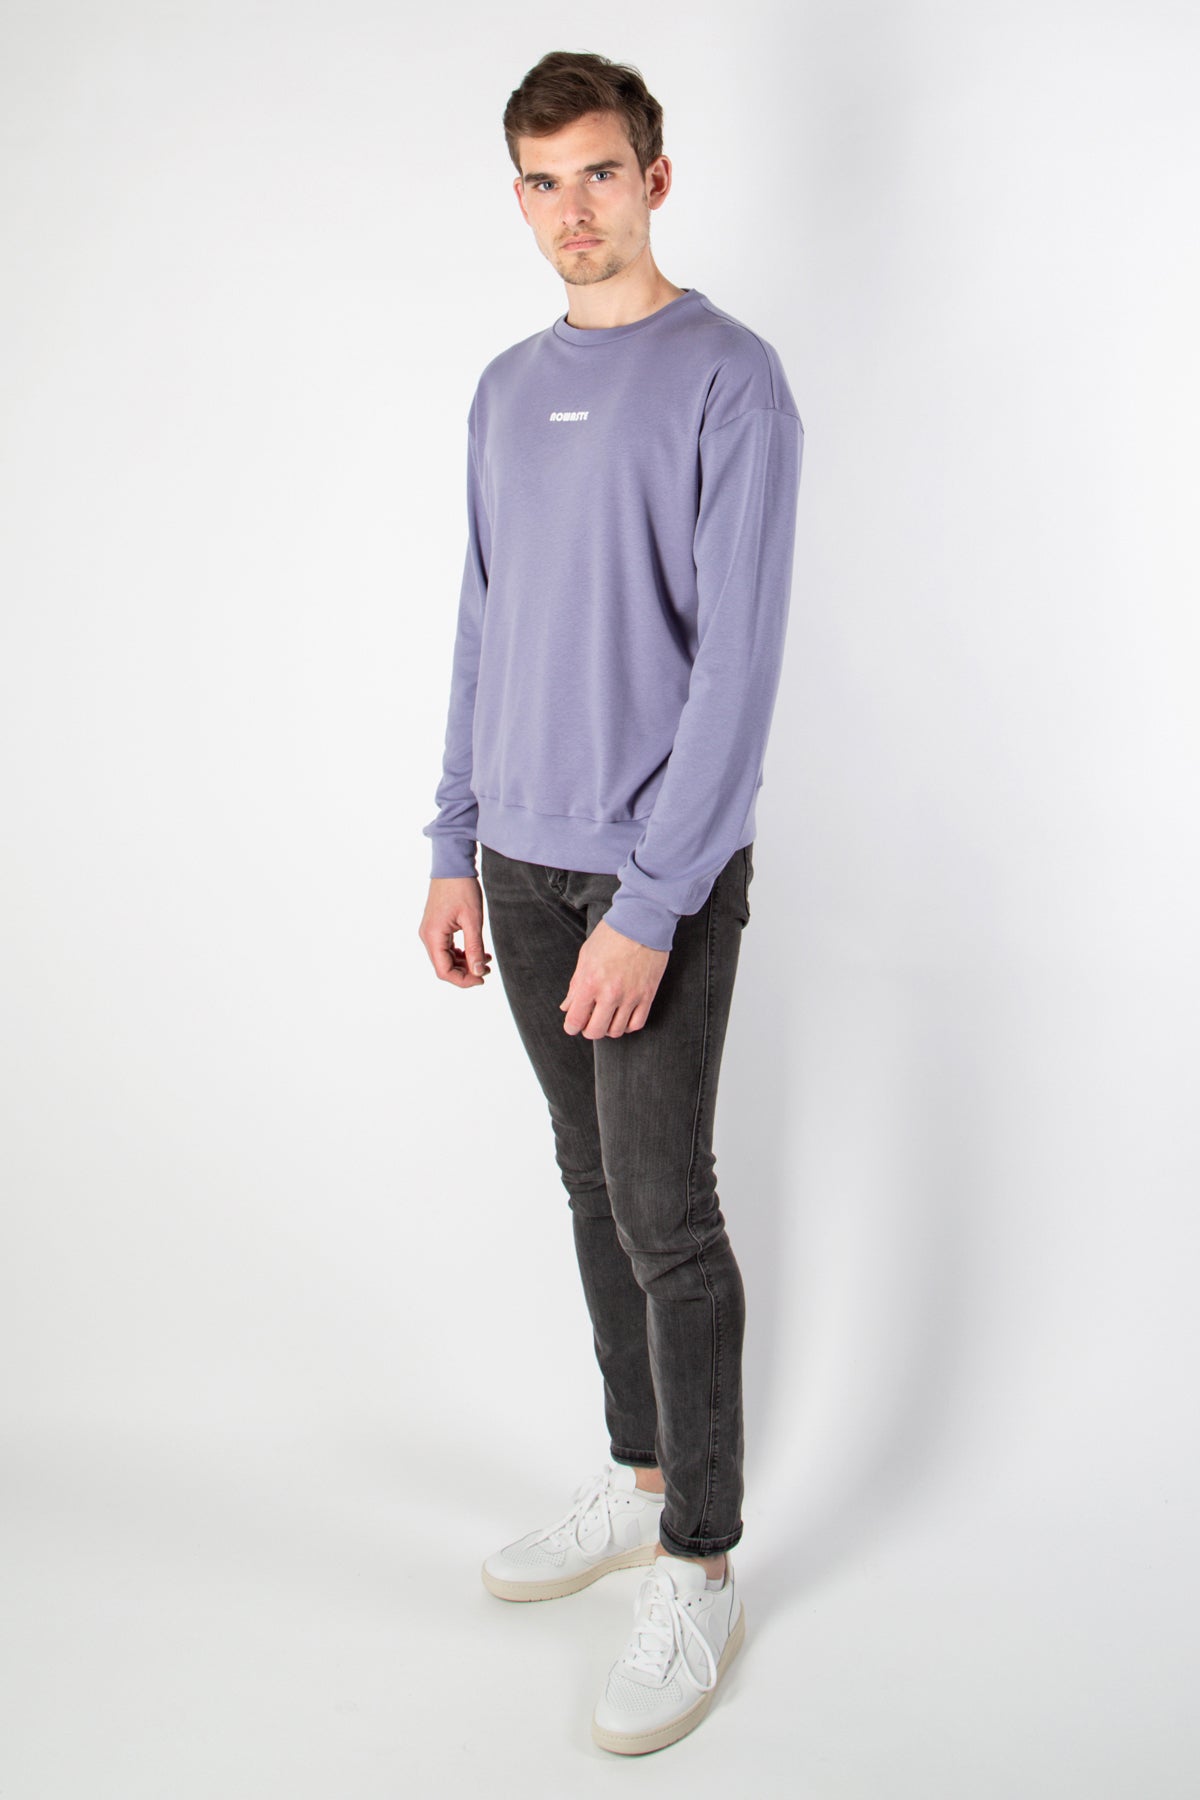 Olan Sweater Unisex - purple